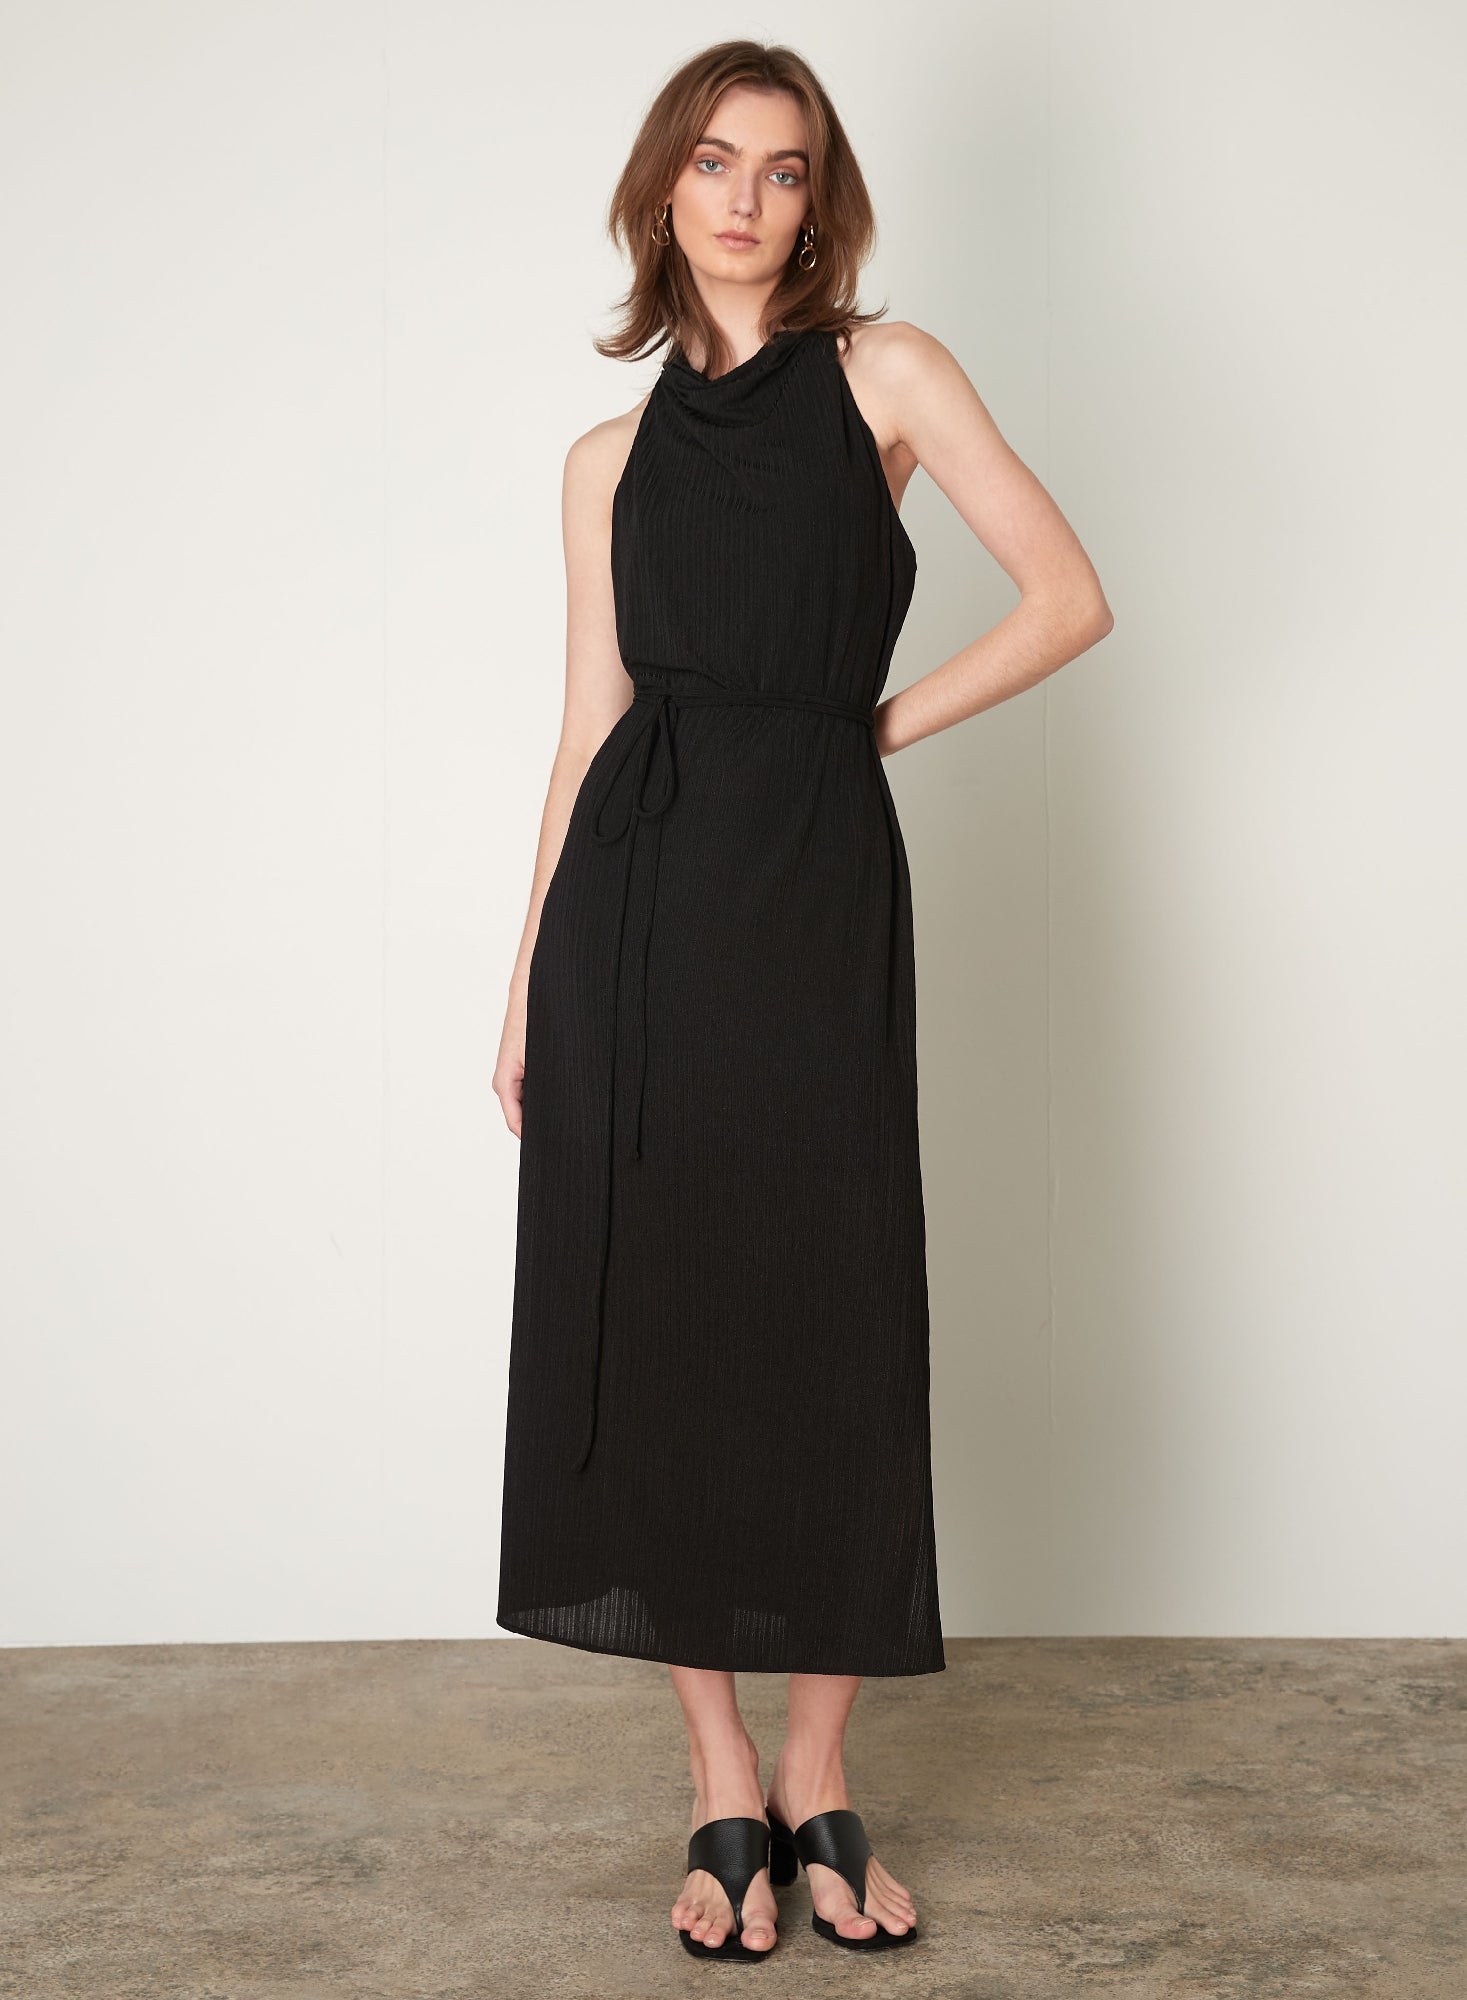 Esmaee Saint Marlo Dress [COLOUR:Black SIZE:XS]